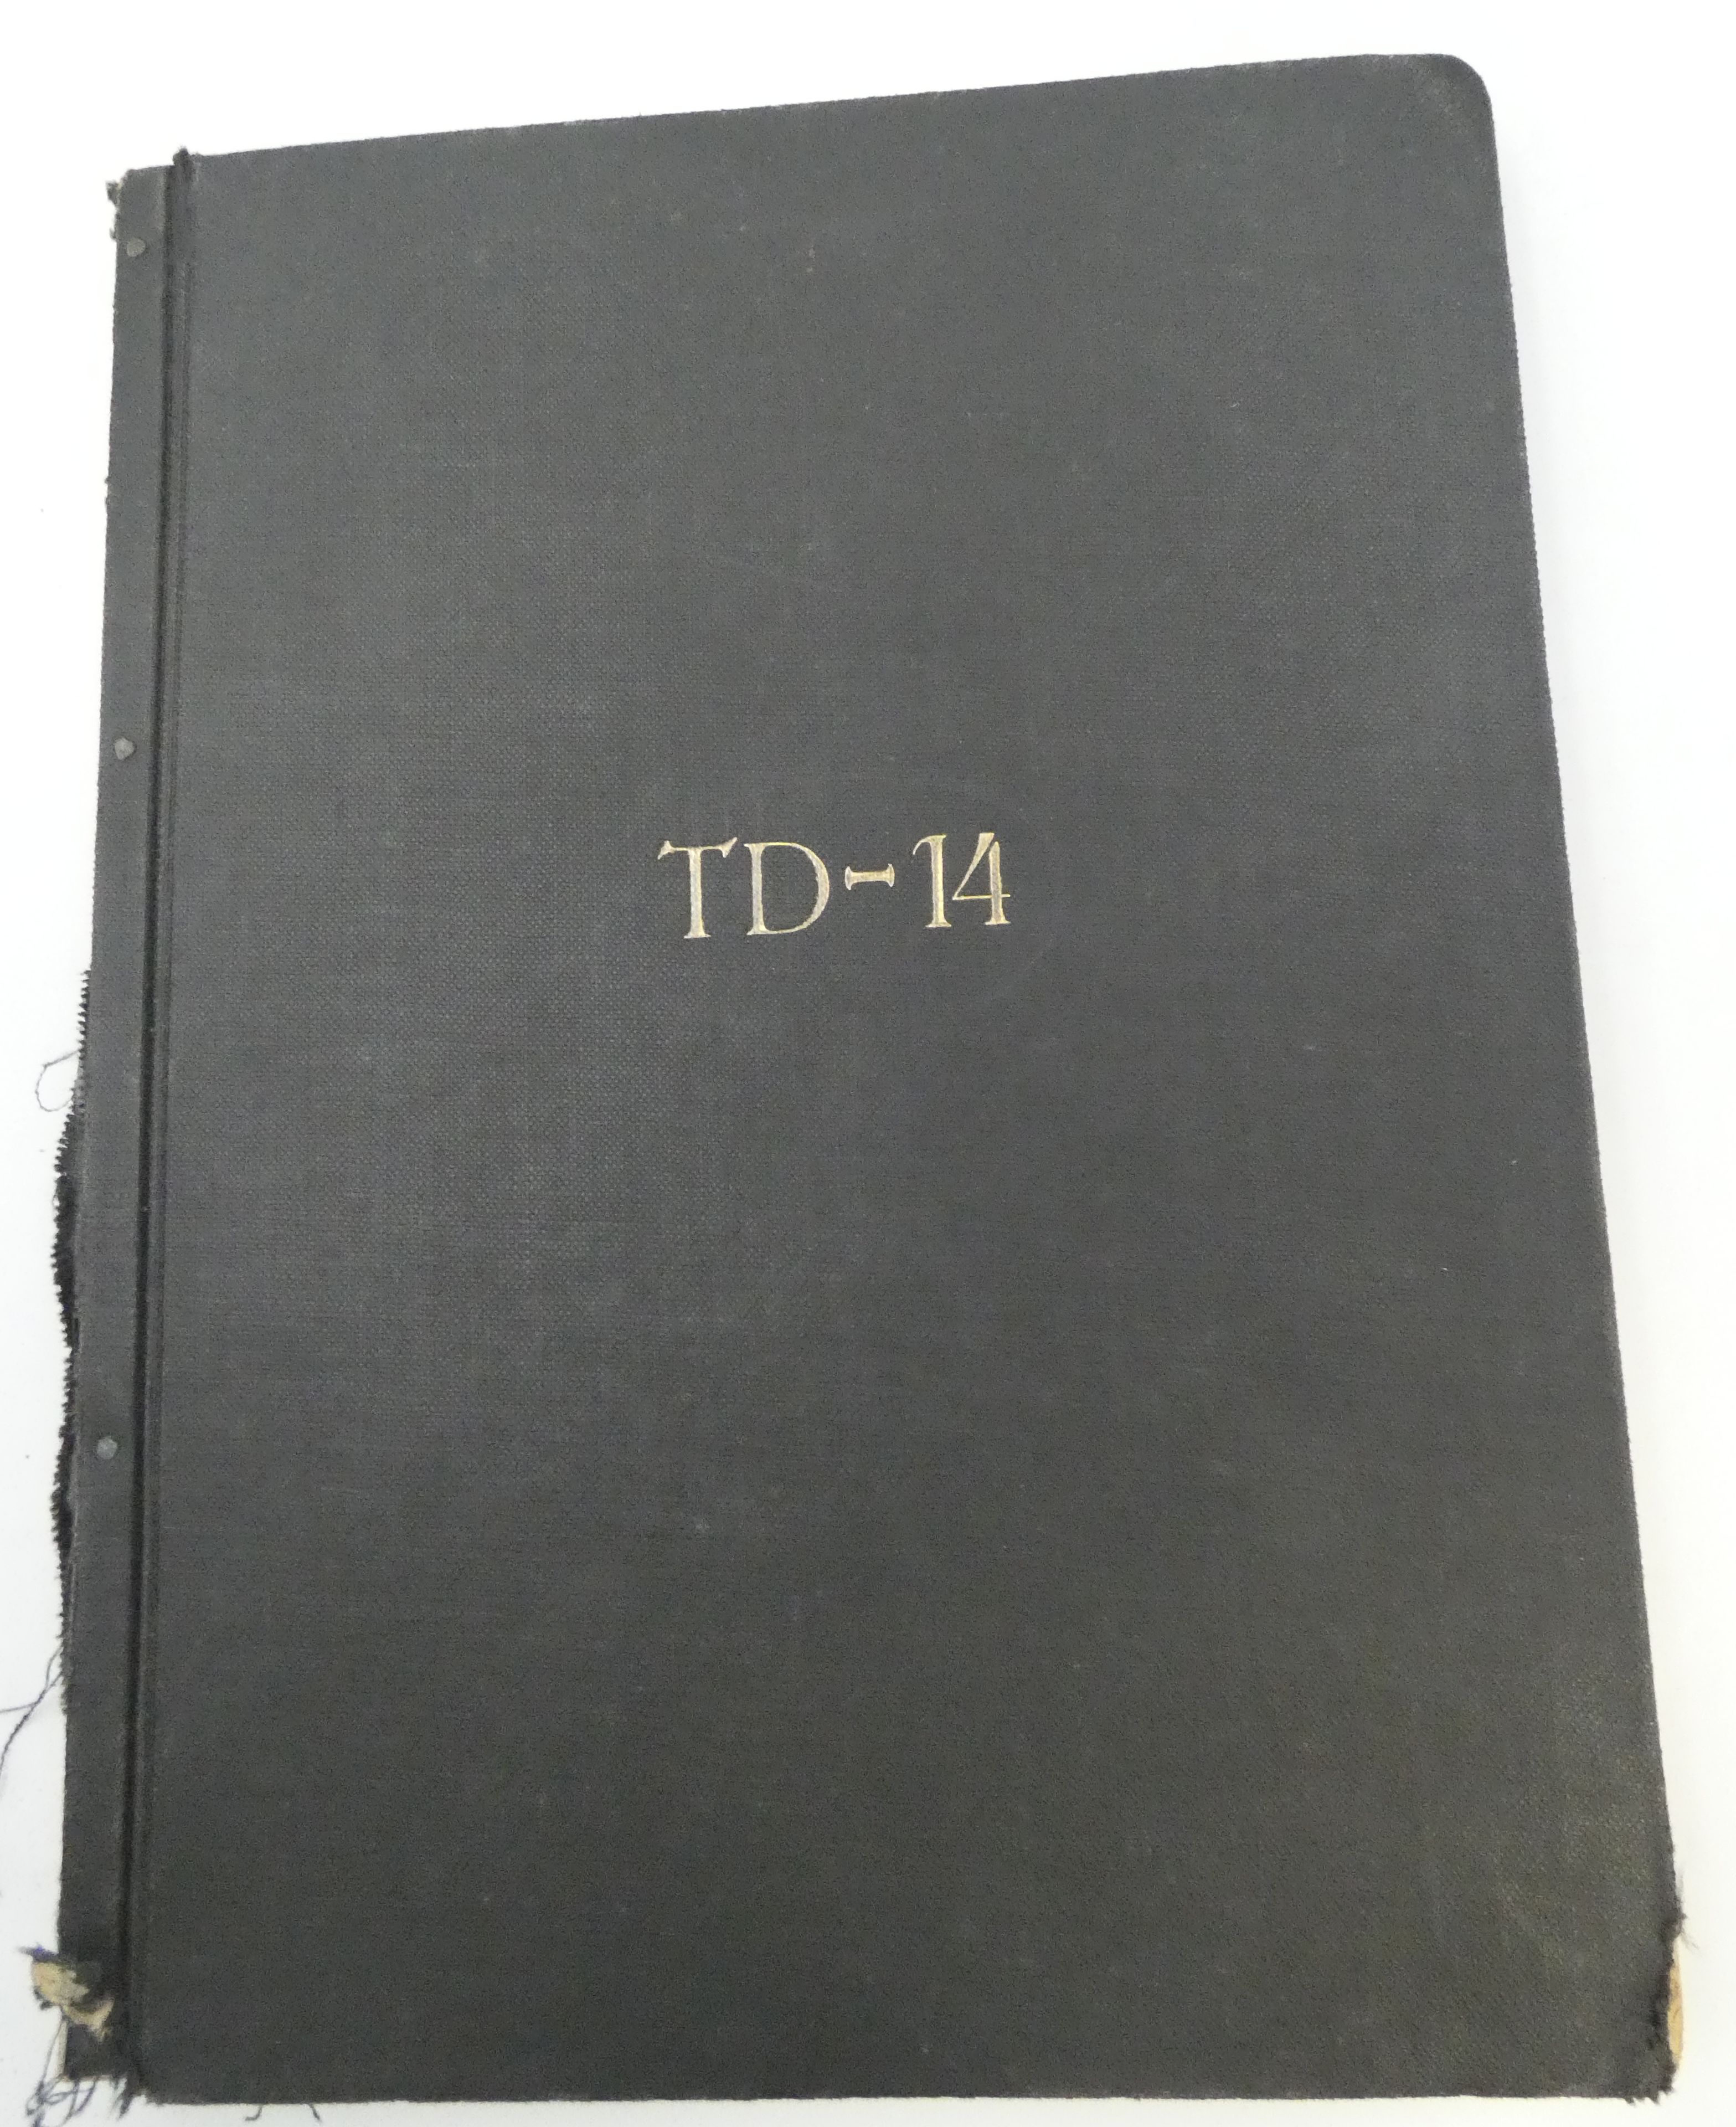 International TD-14 operation manual